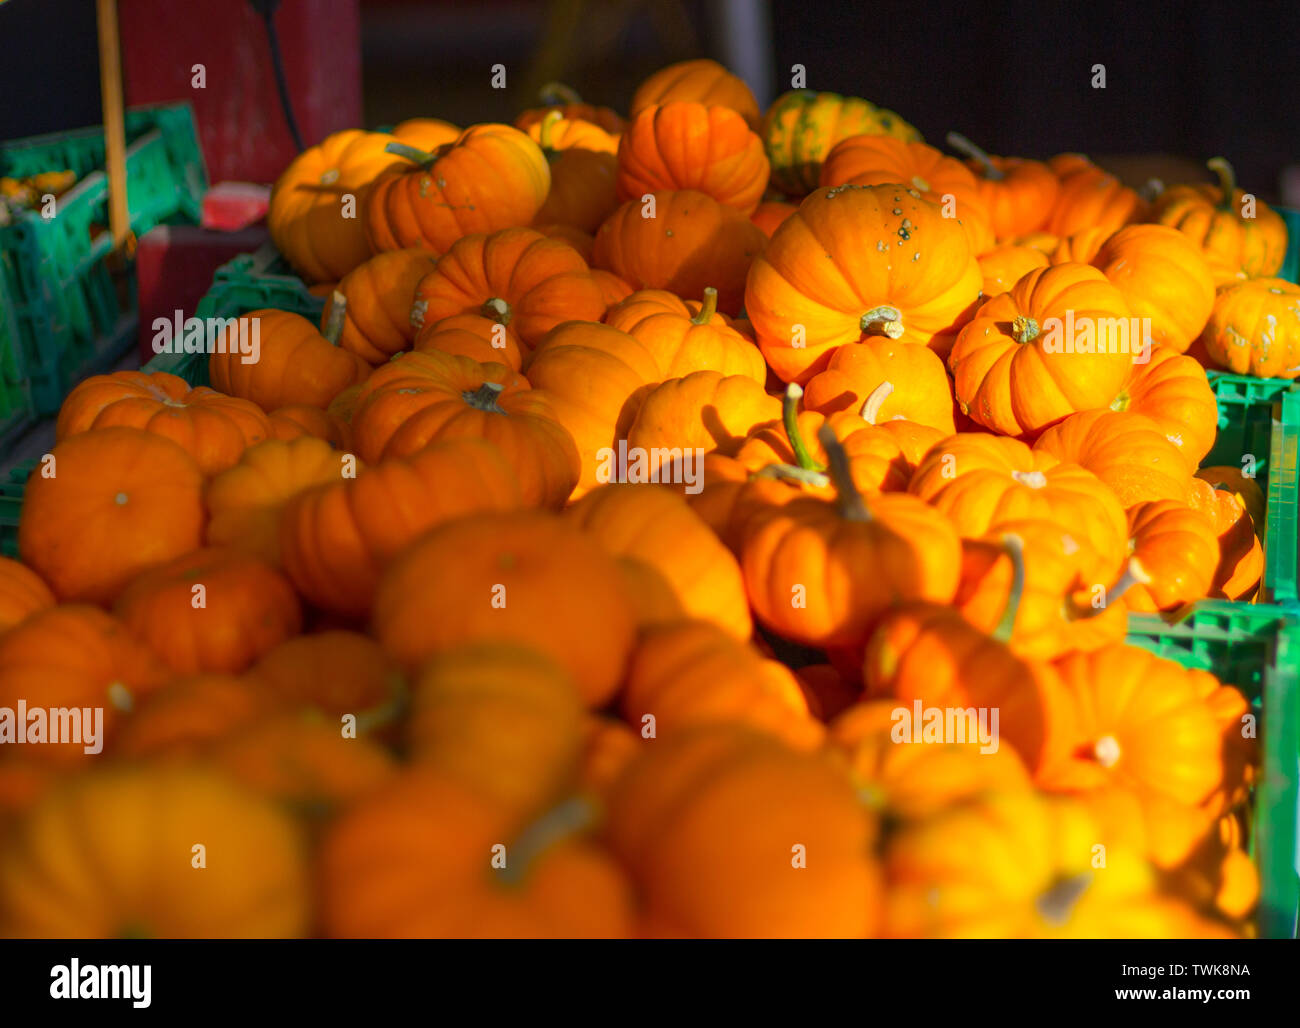 Pumpkins on display at a farm Stock Photo